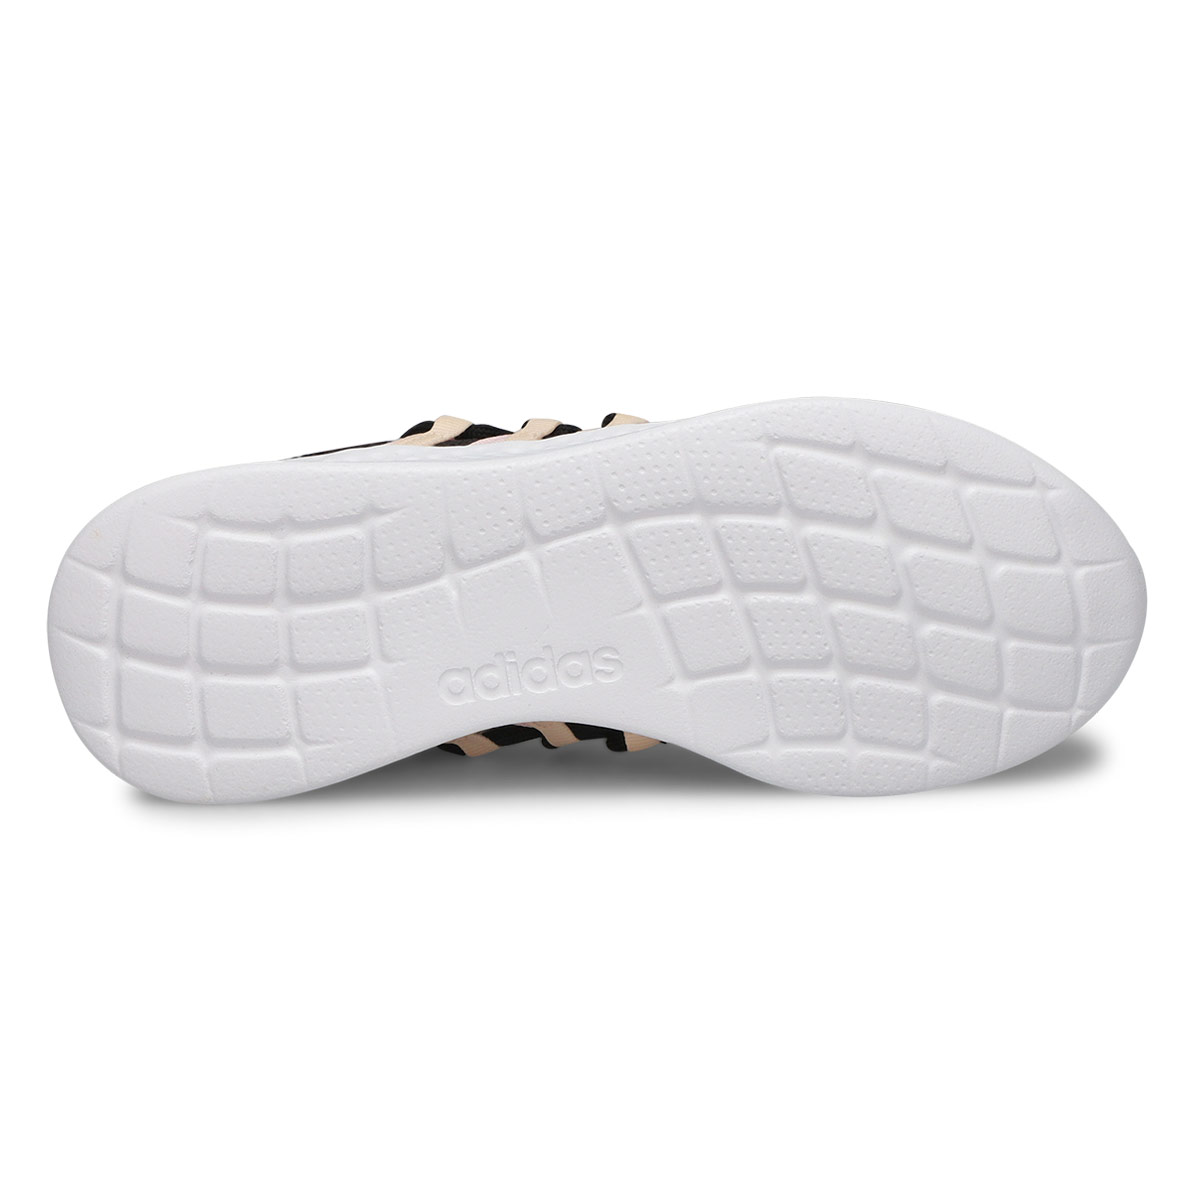 adidas Puremotion Adapt 2.0 Shoes - White | adidas Canada